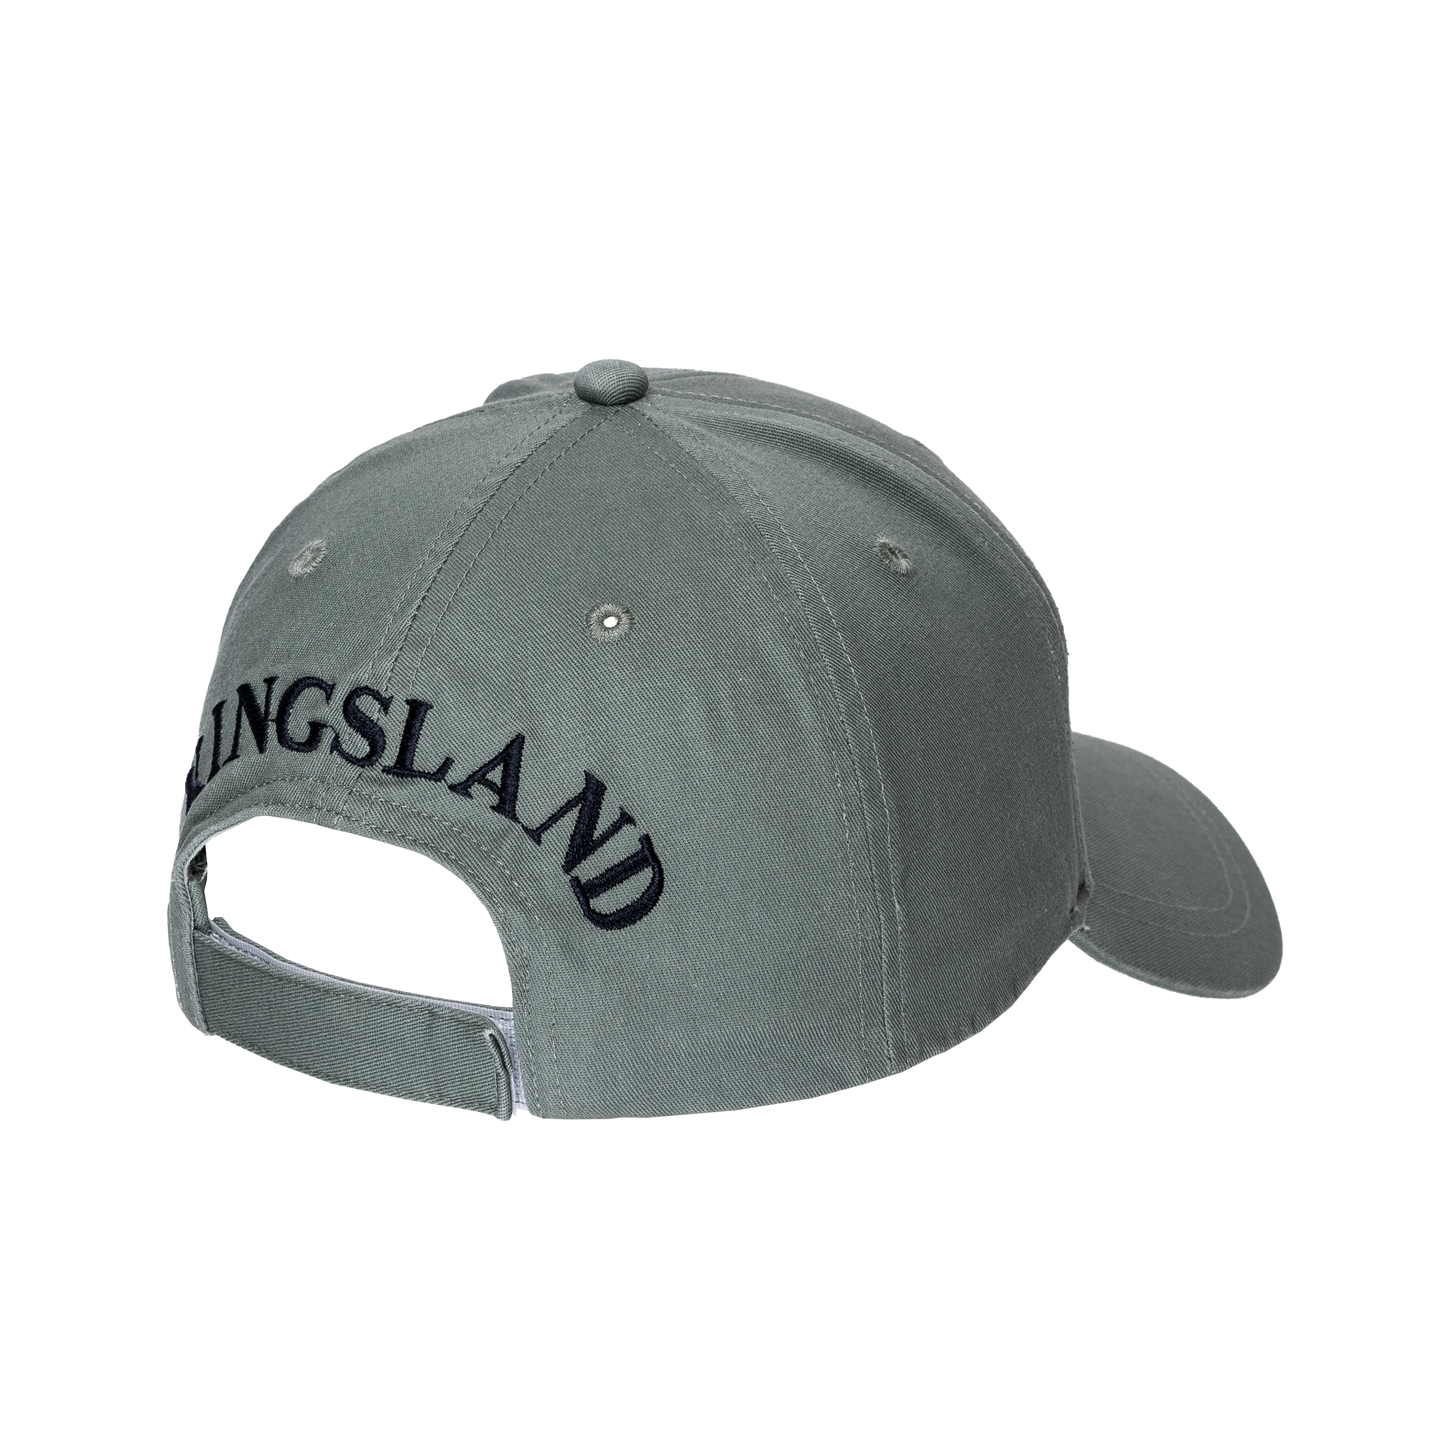 Kingsland Unisex Cap